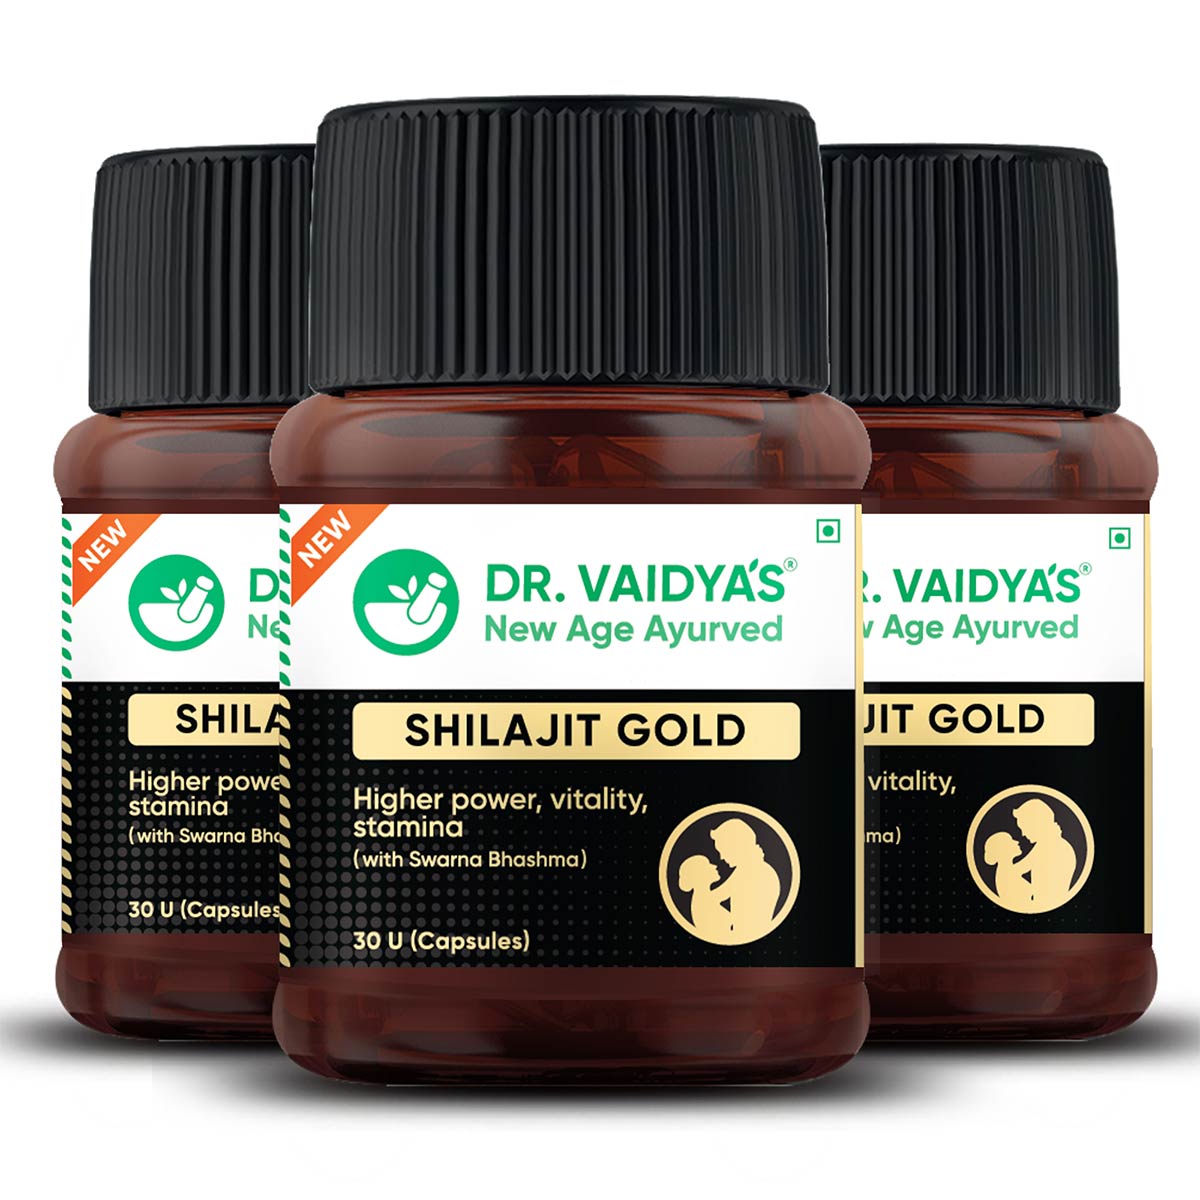 ShilajitGold : Premium Shilajit In Its Purest Form For More Power